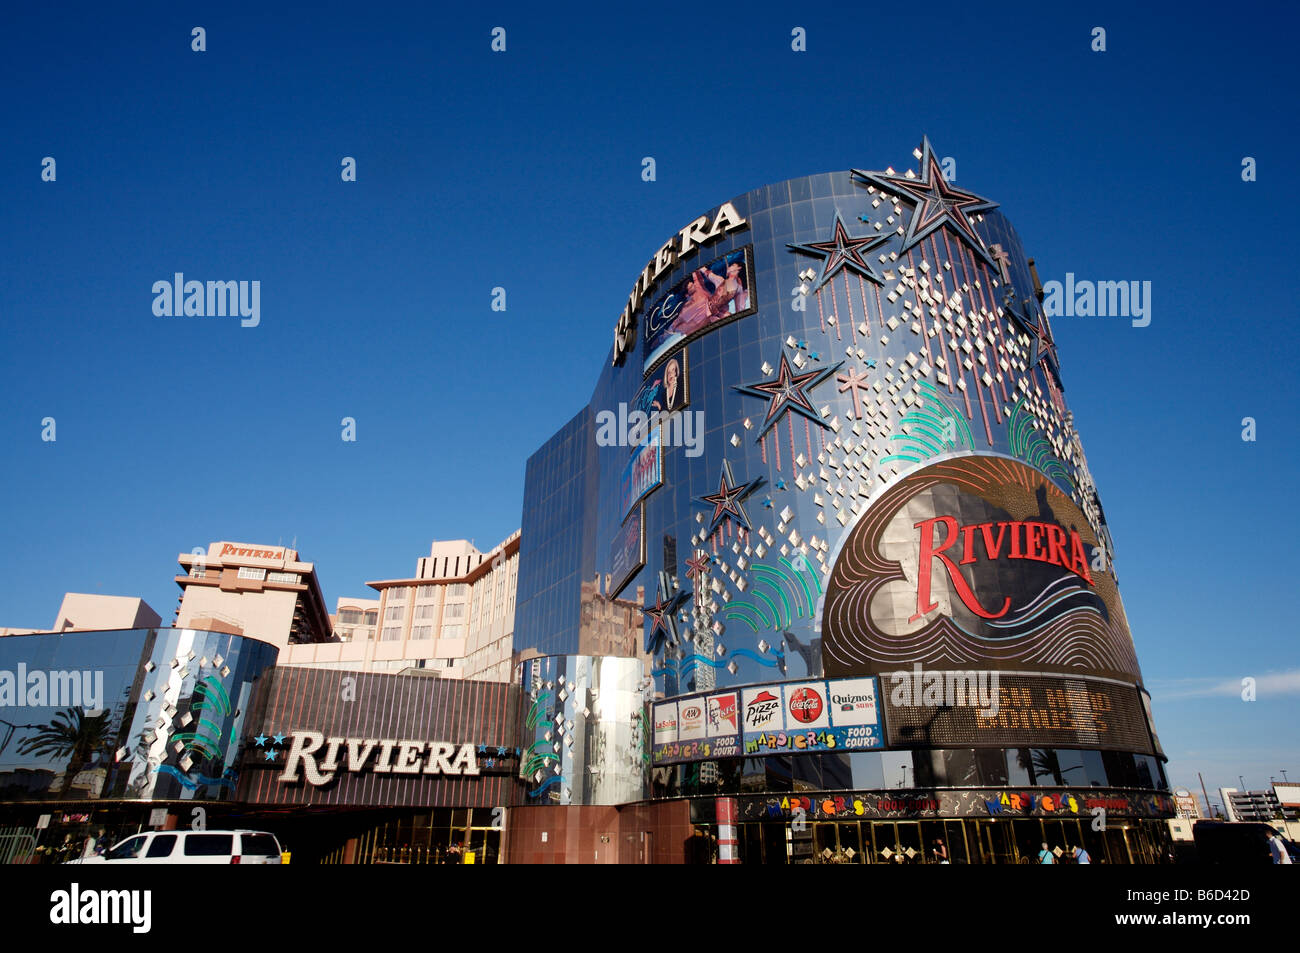 60 Hotel Las Riviera Vegas Images, Stock Photos, 3D objects, & Vectors